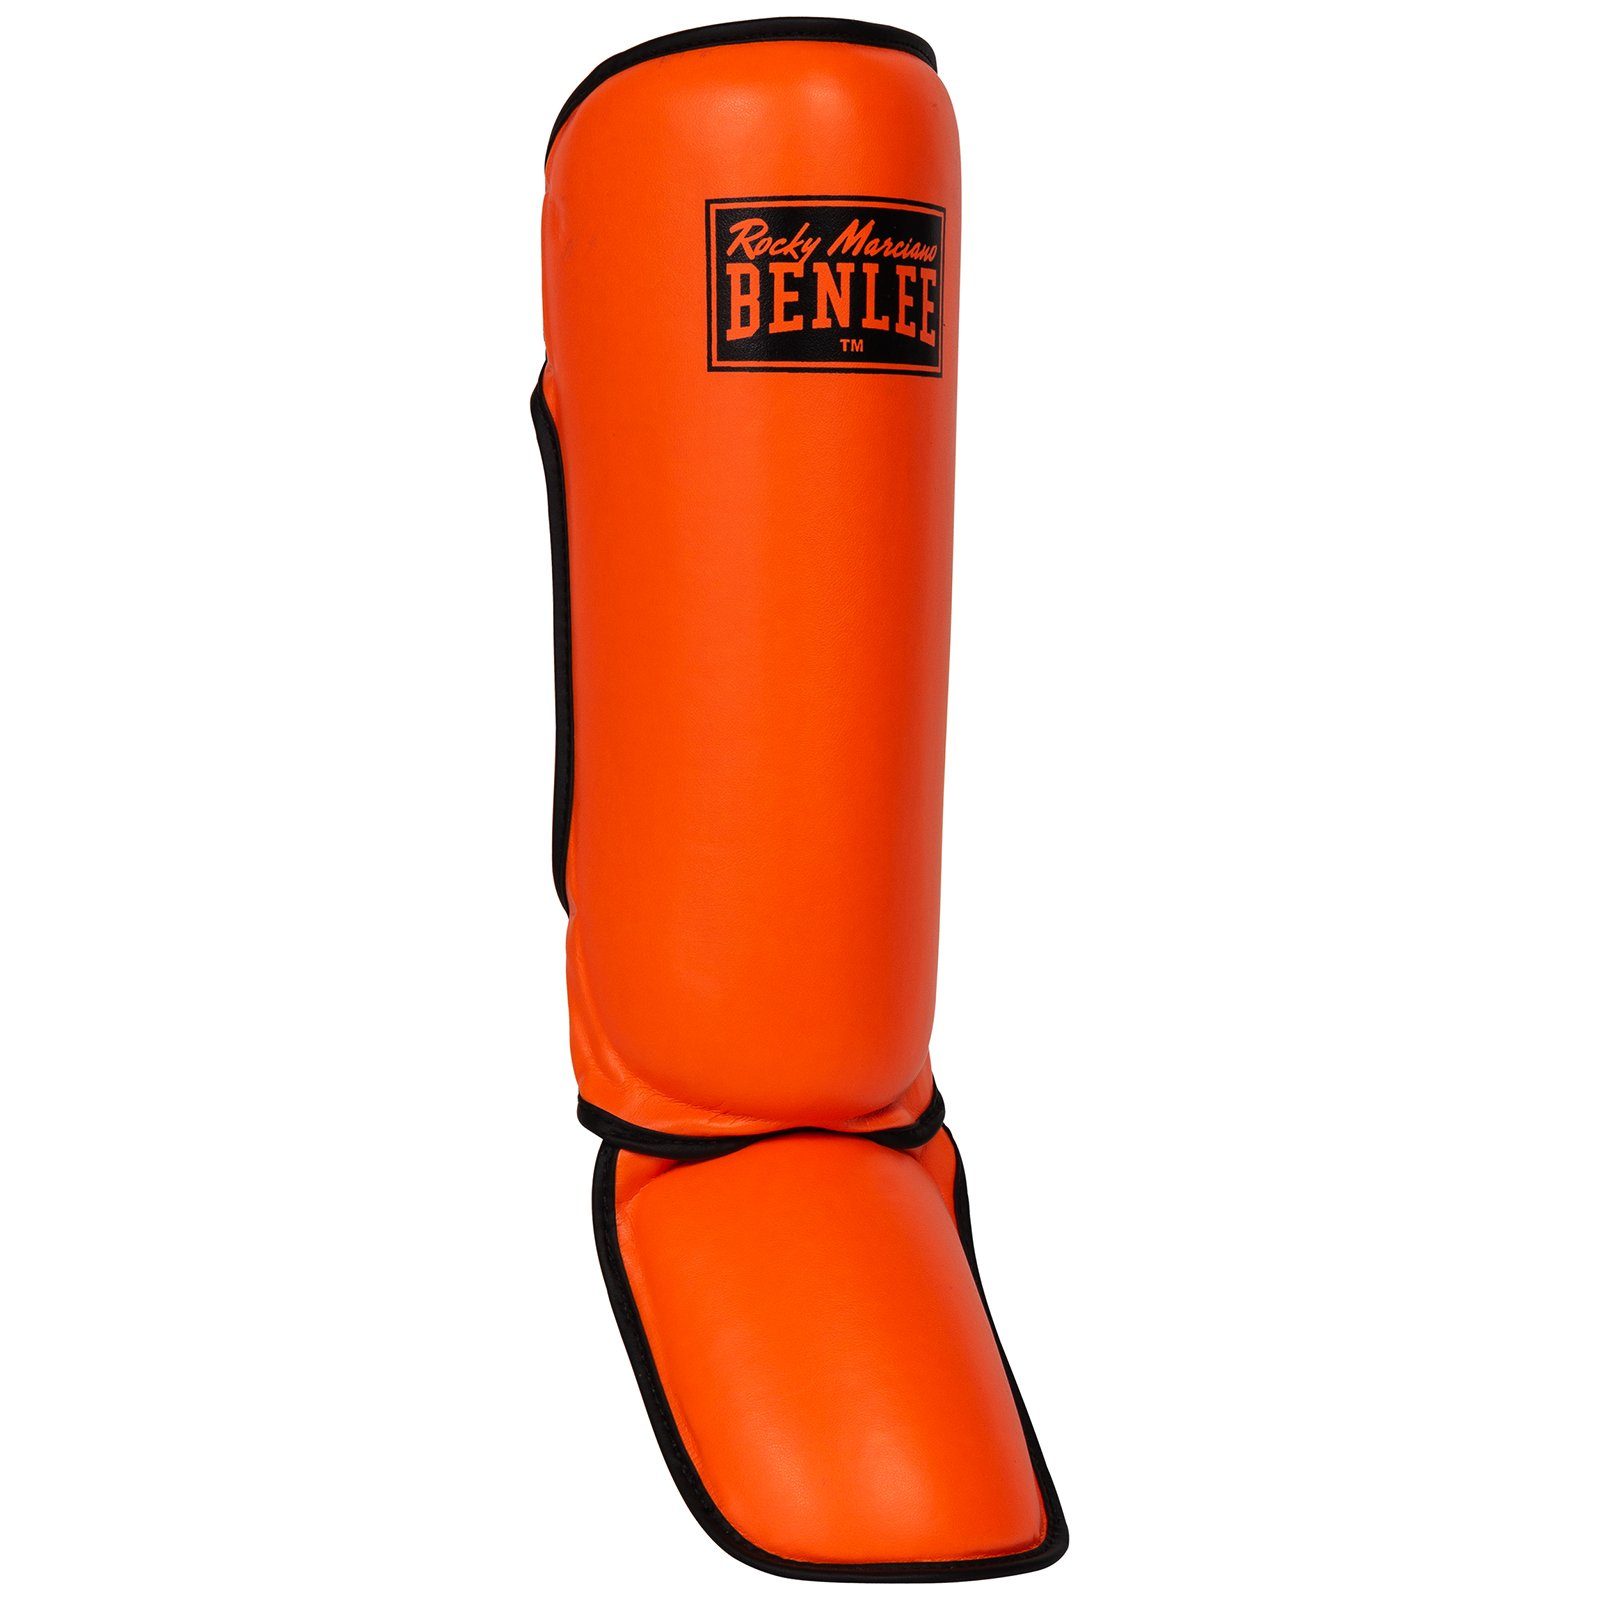 Benlee Rocky Marciano Kampfsport Schienbeinschoner GUARDIAN Neon Orange